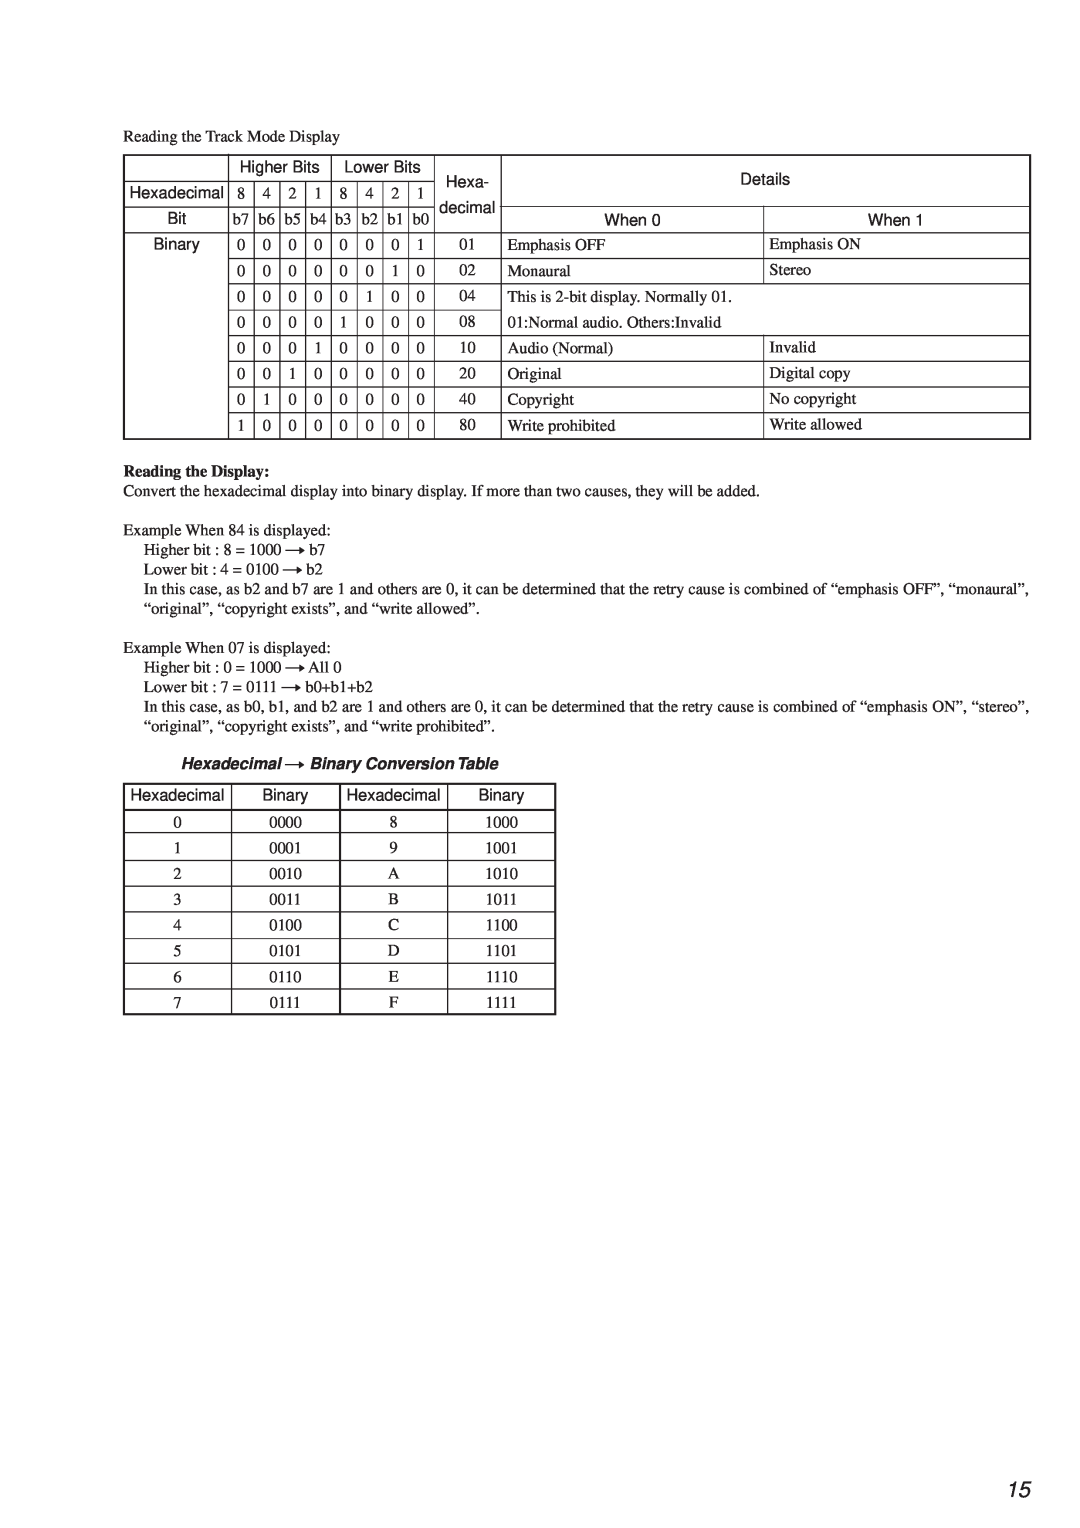 Sony HCD-MD373 service manual Reading the Display, Hexadecimal nBinary Conversion Table 